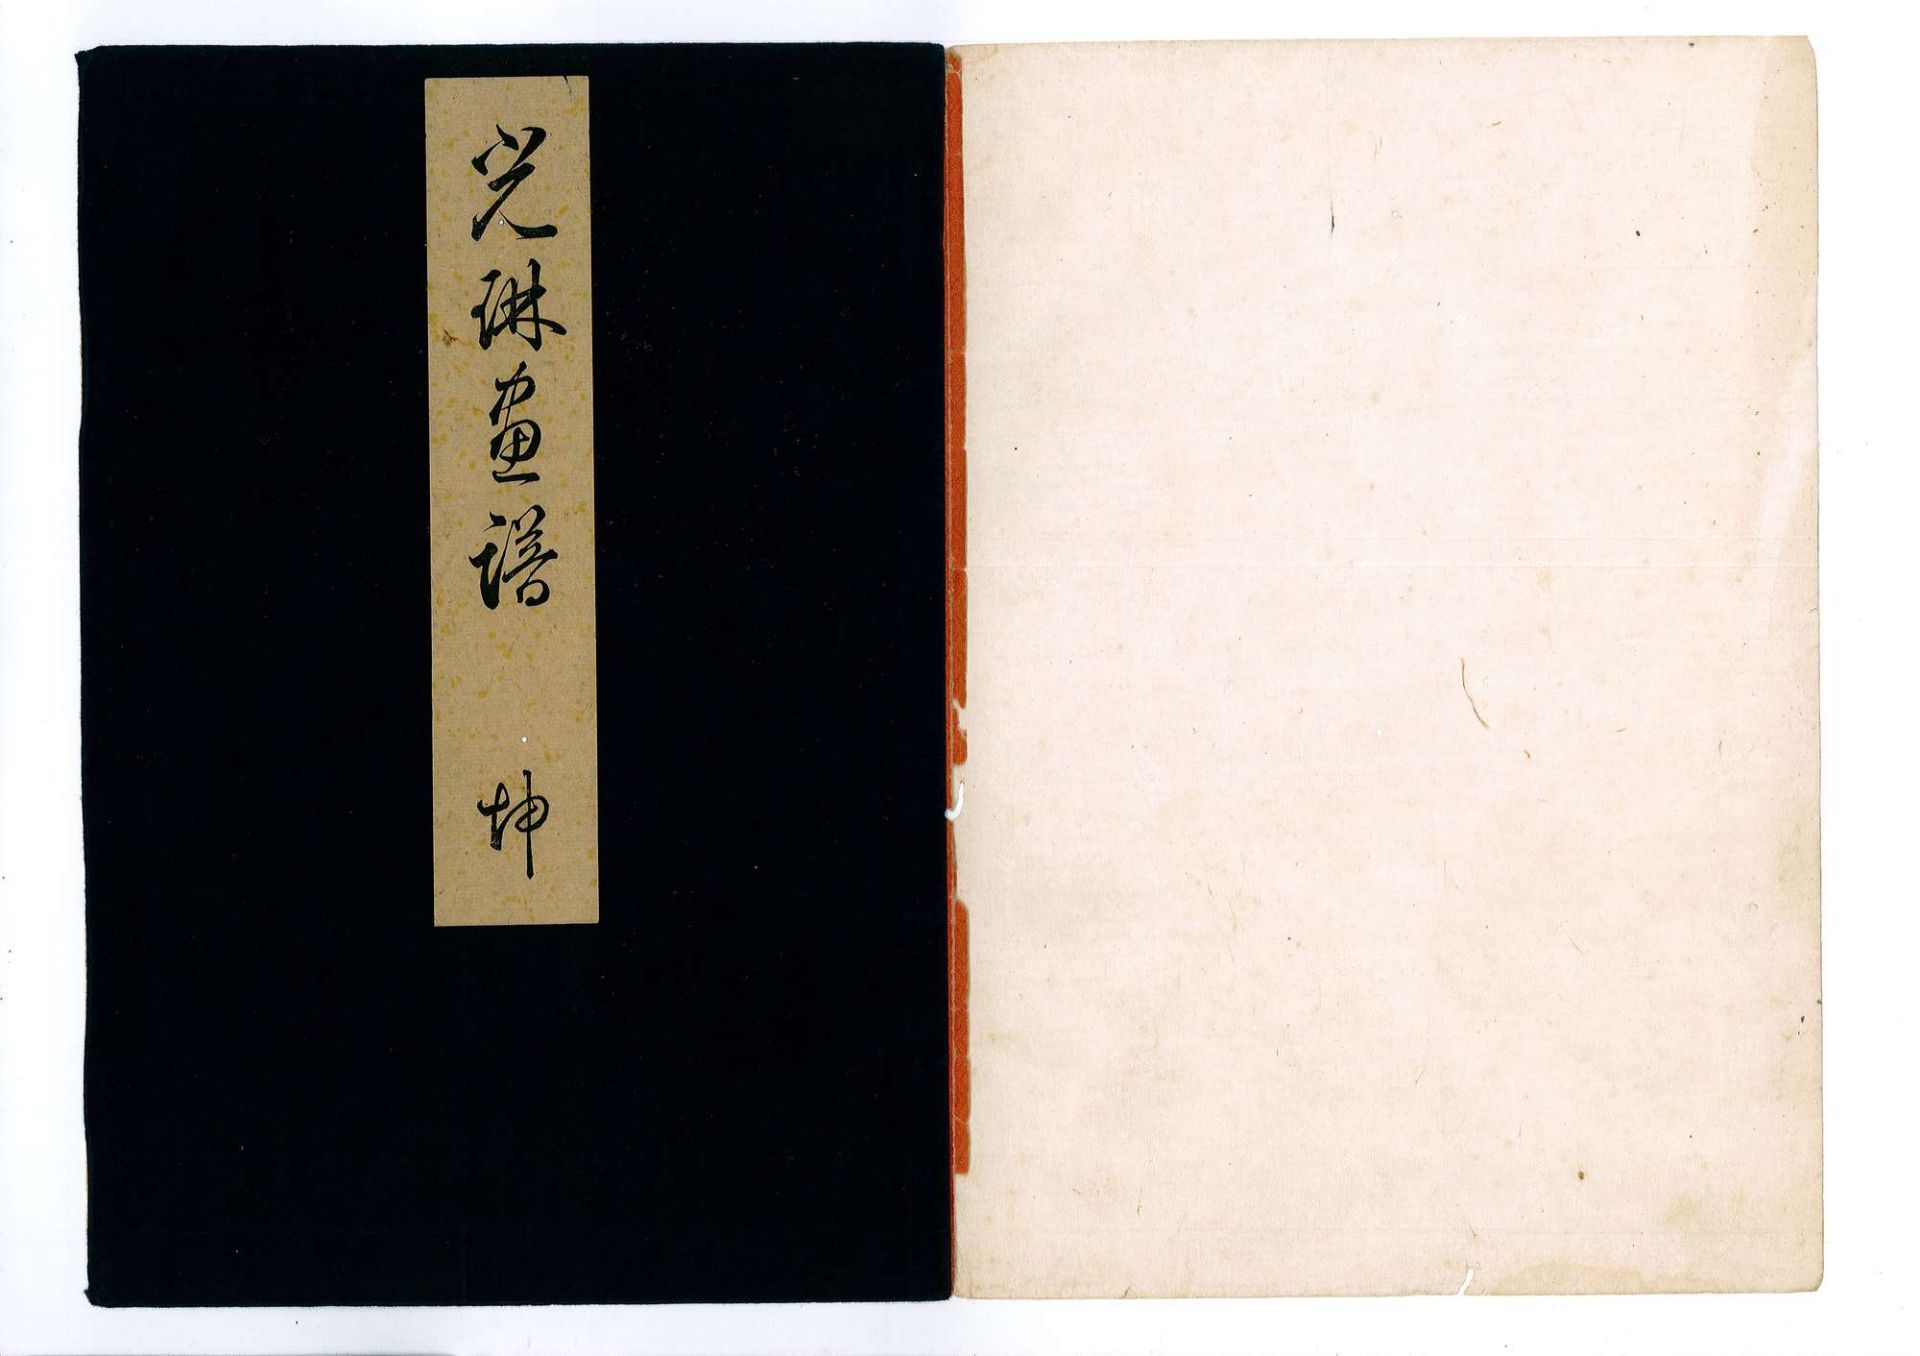 Ogata K?rin (Kyoto 1658 - 1716) attribuito